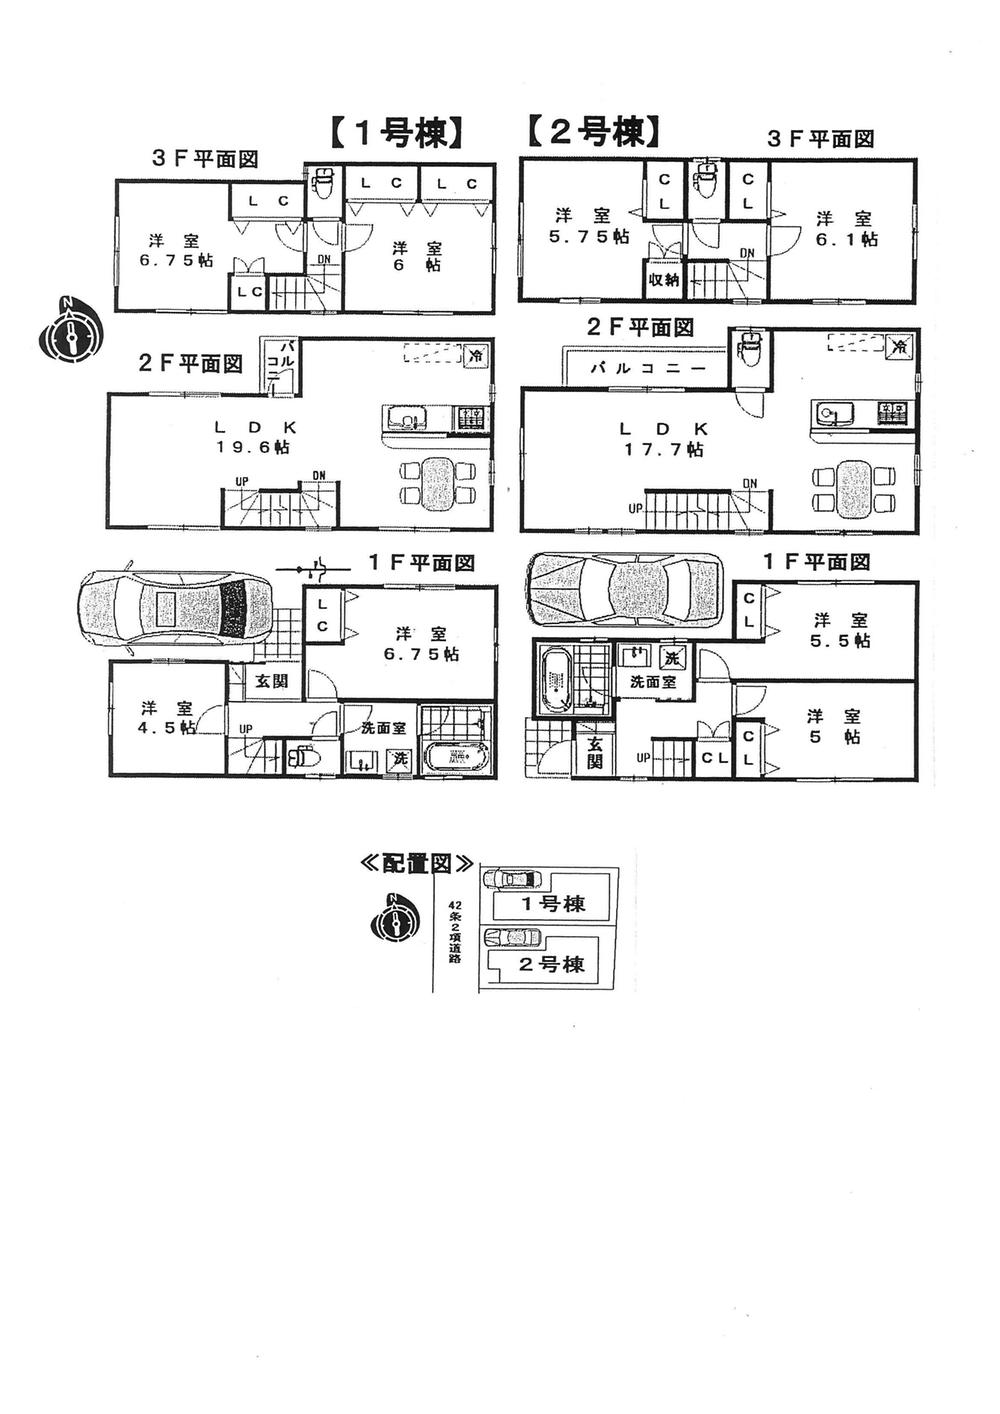 Floor plan. 51,800,000 yen, 4LDK, Land area 63.74 sq m , Building area 97.19 sq m